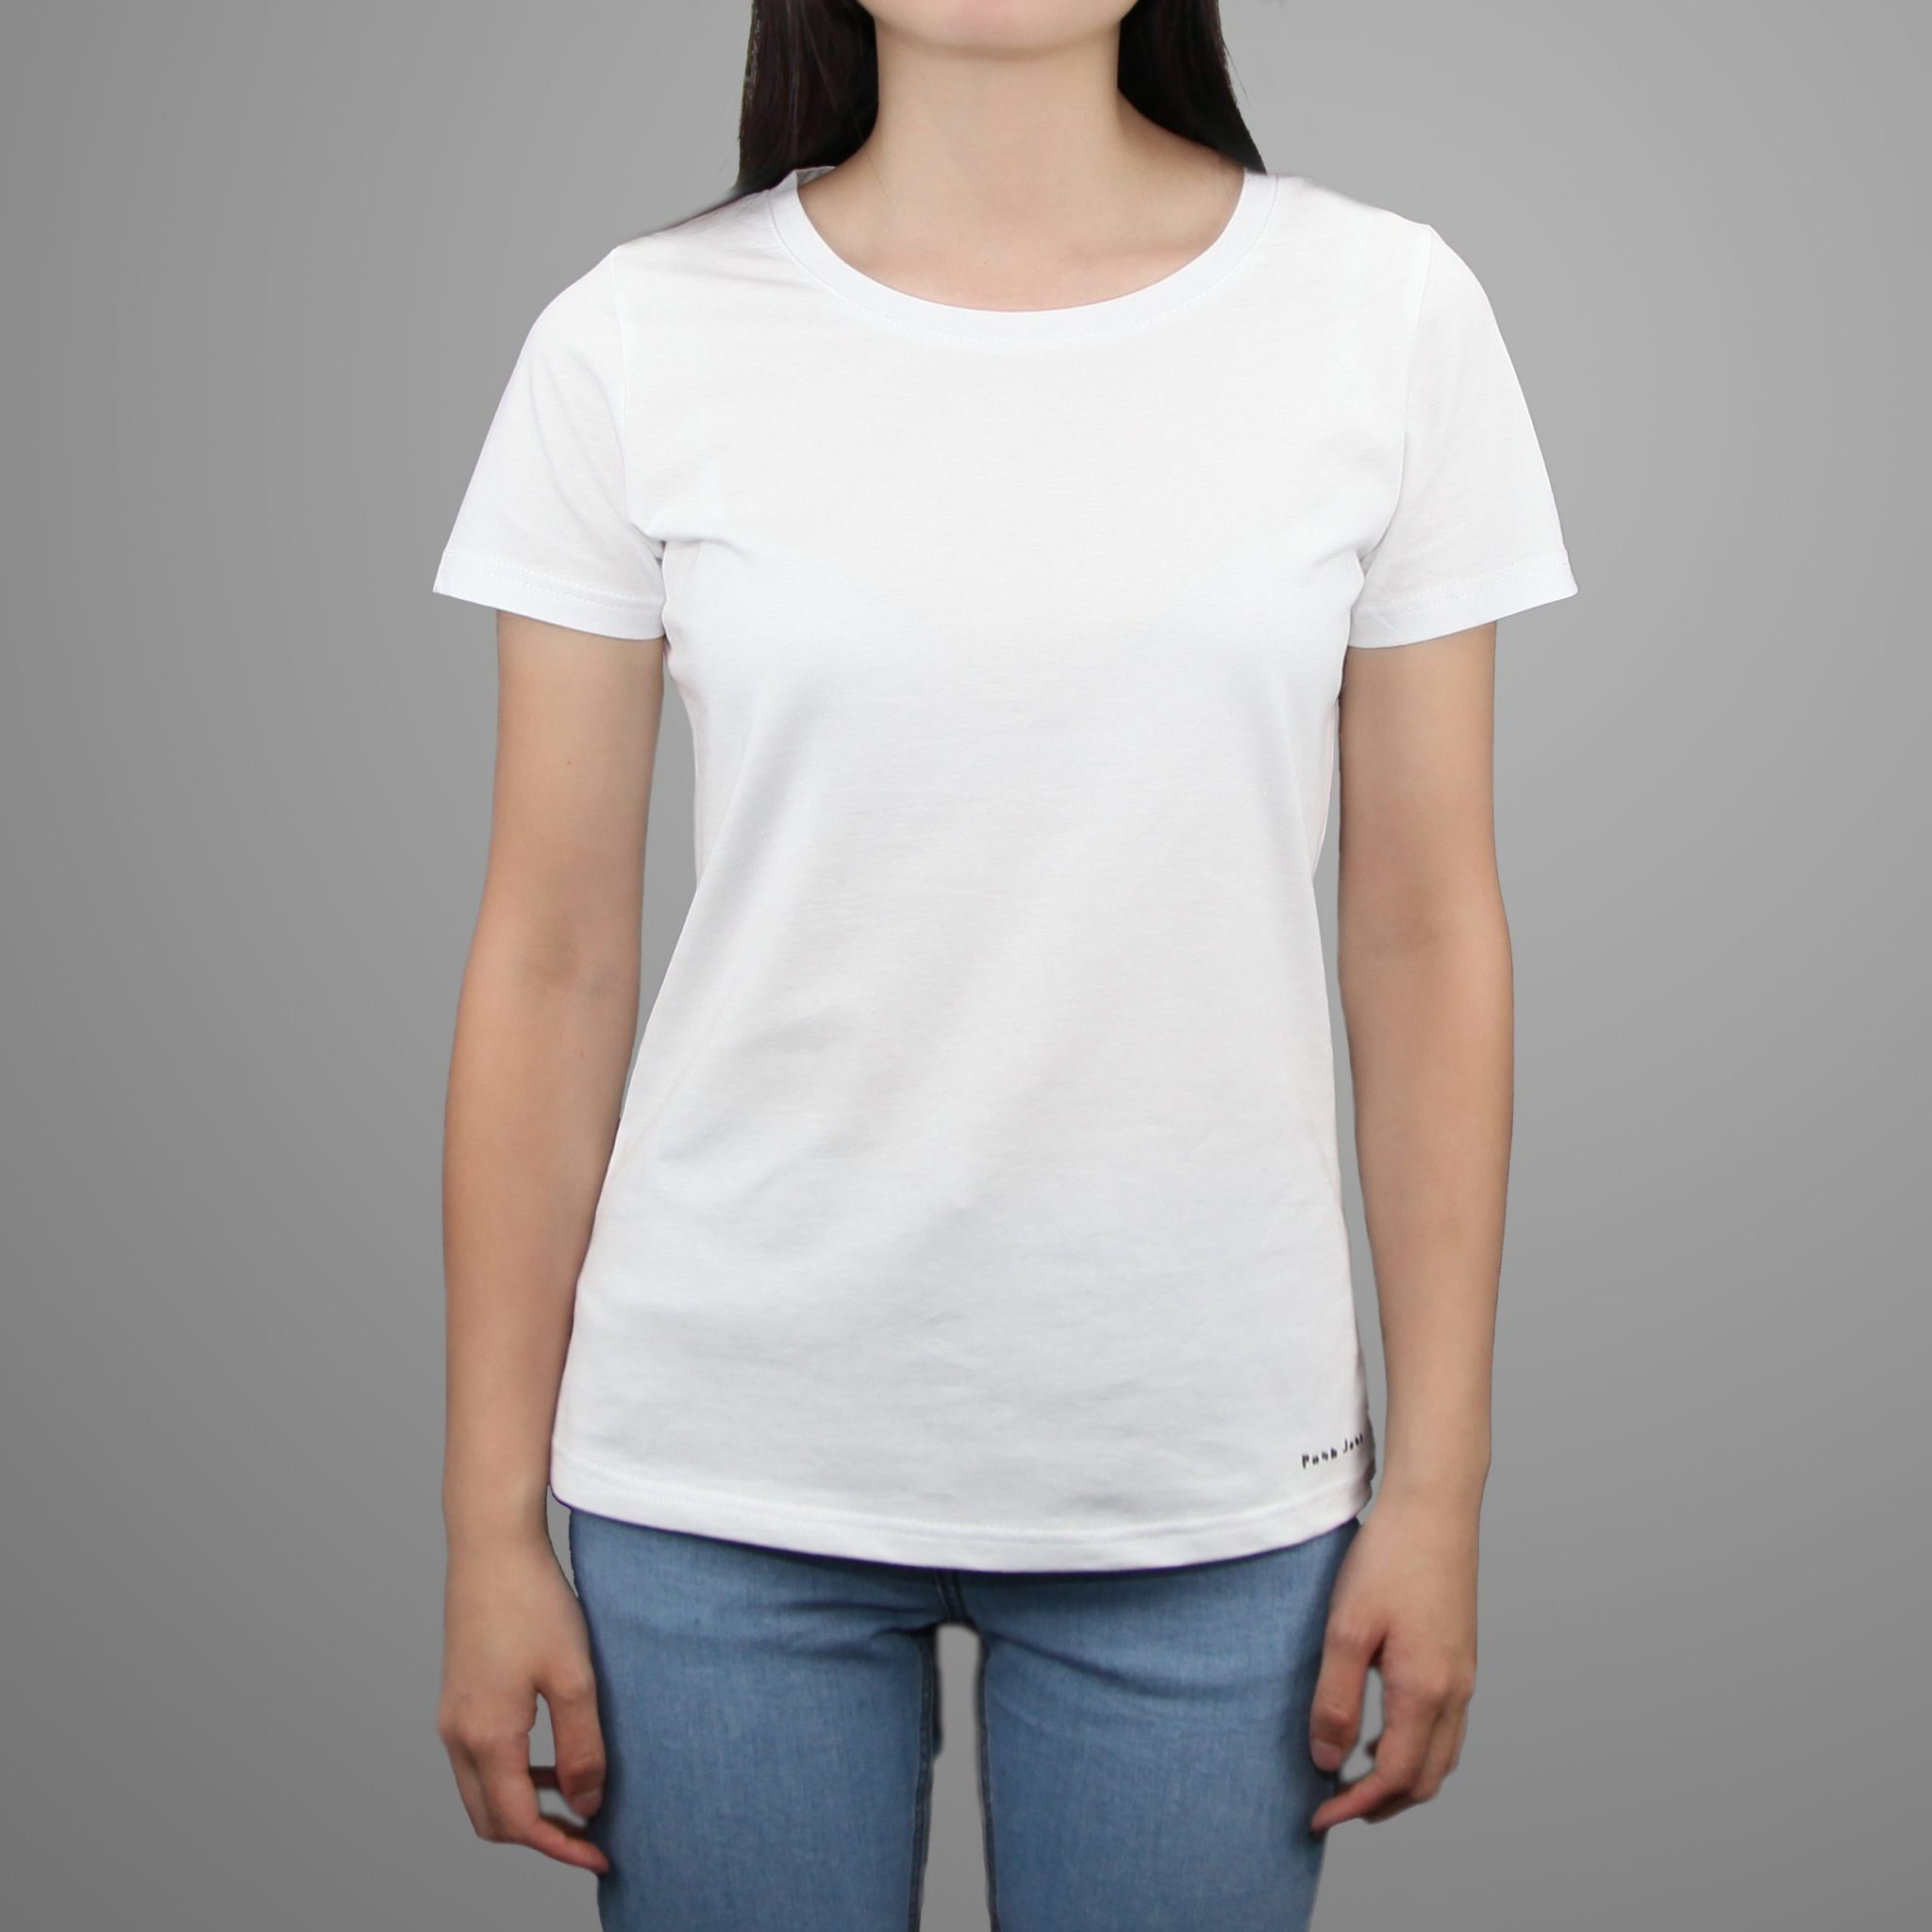 T-shirt (White) - Posh Josh